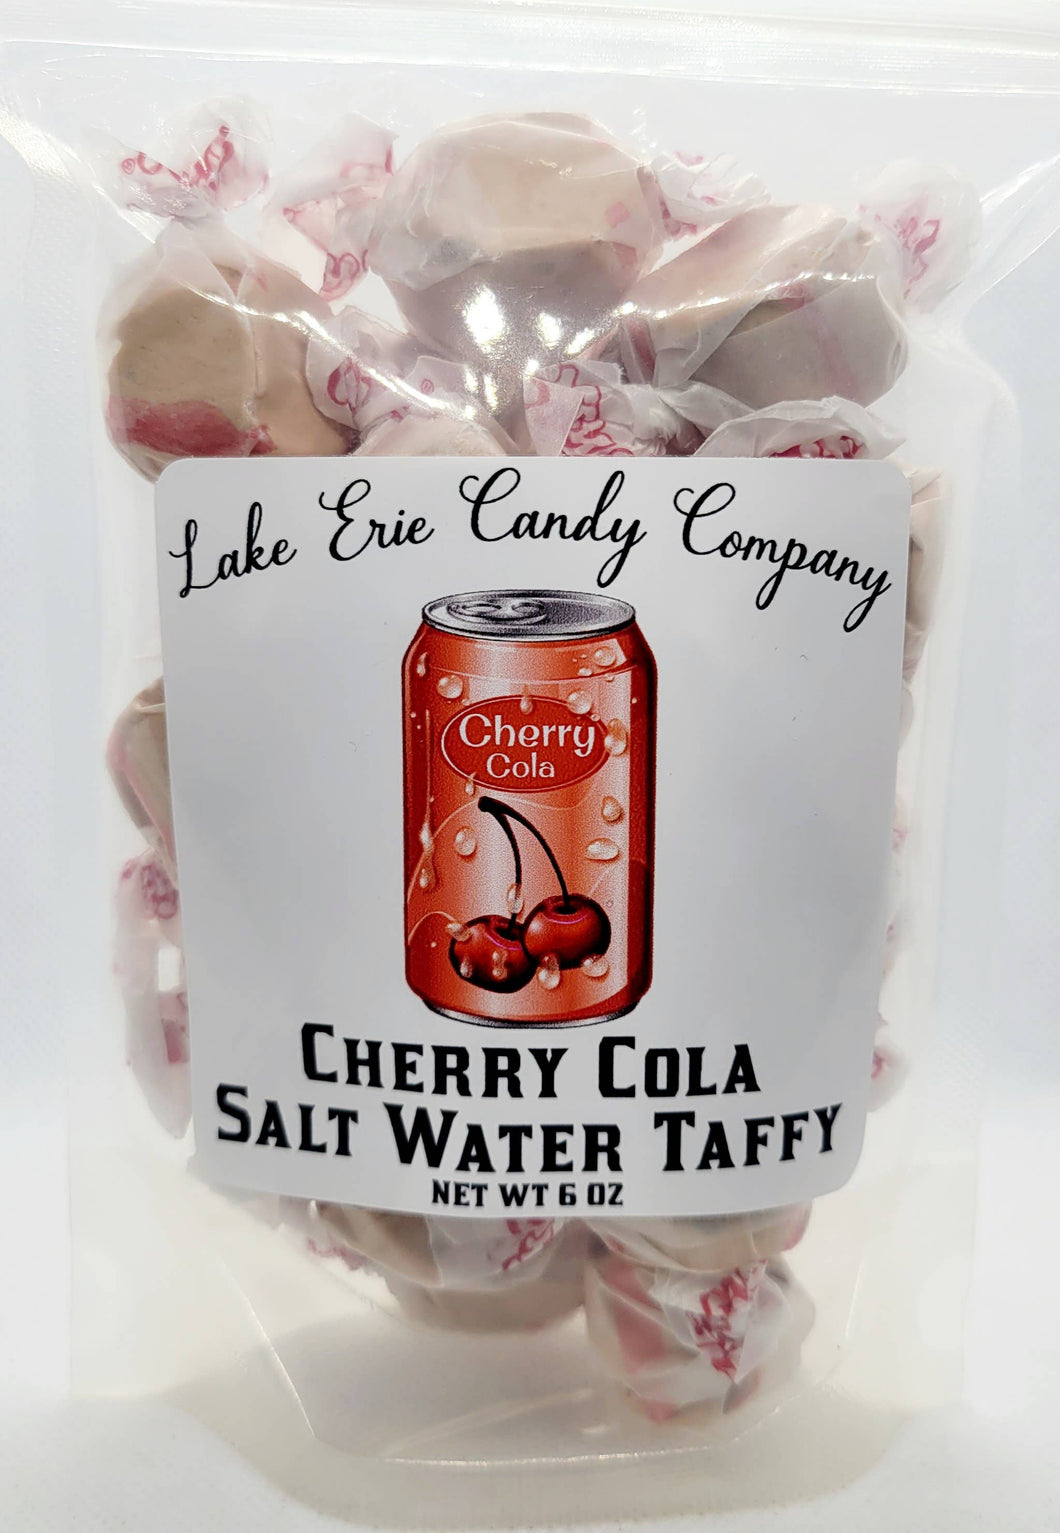 Lake Erie Candy Company - Cherry Cola Salt Water Taffy